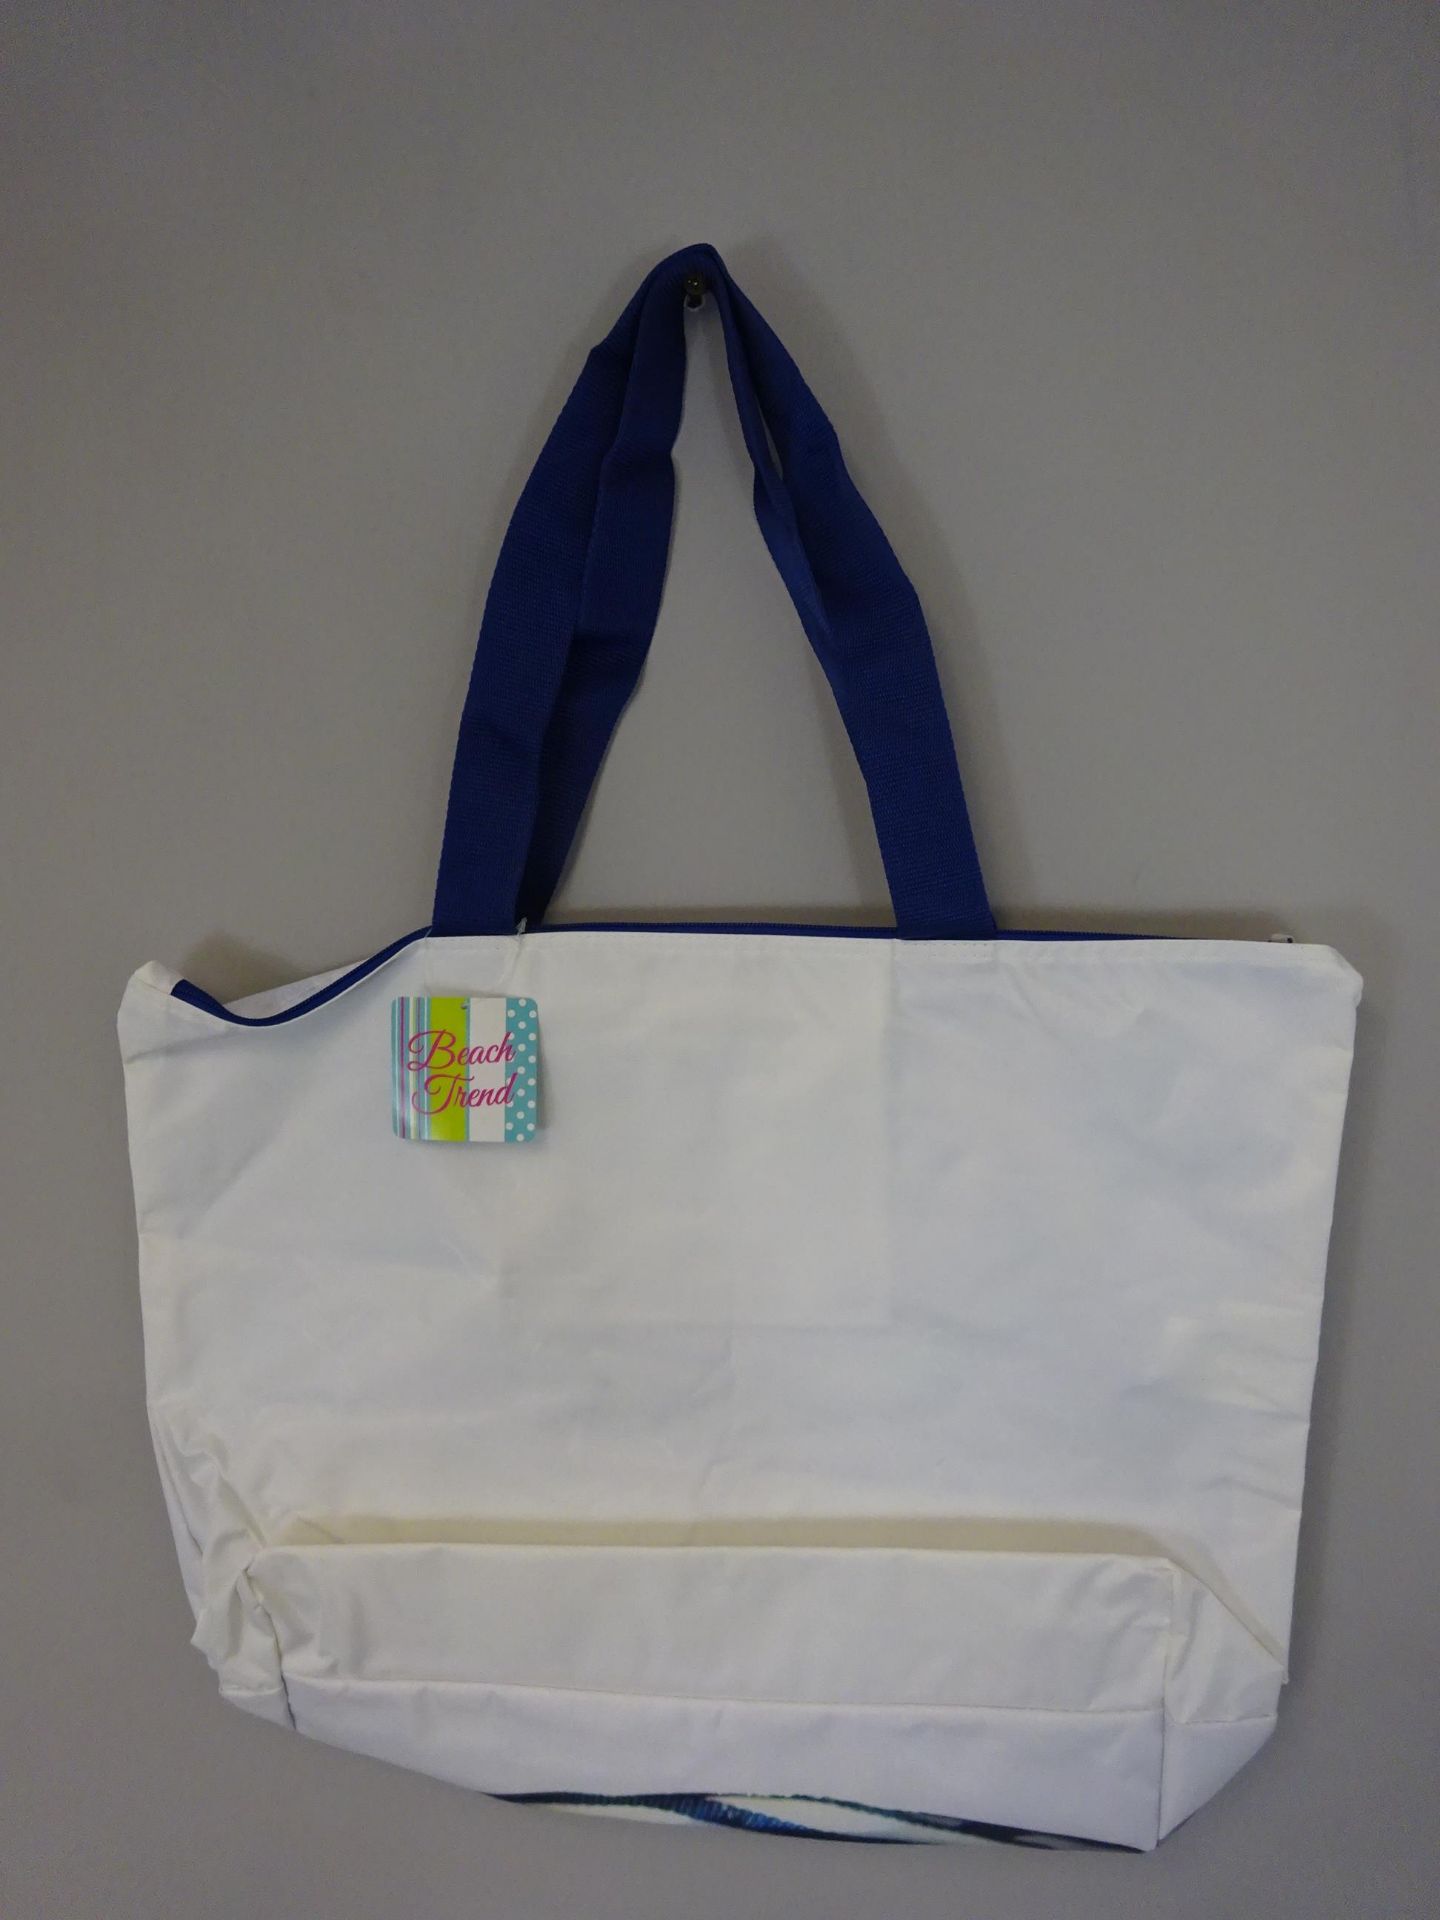 New Stiped Bag Patterened Waterproof Bag - Image 2 of 2